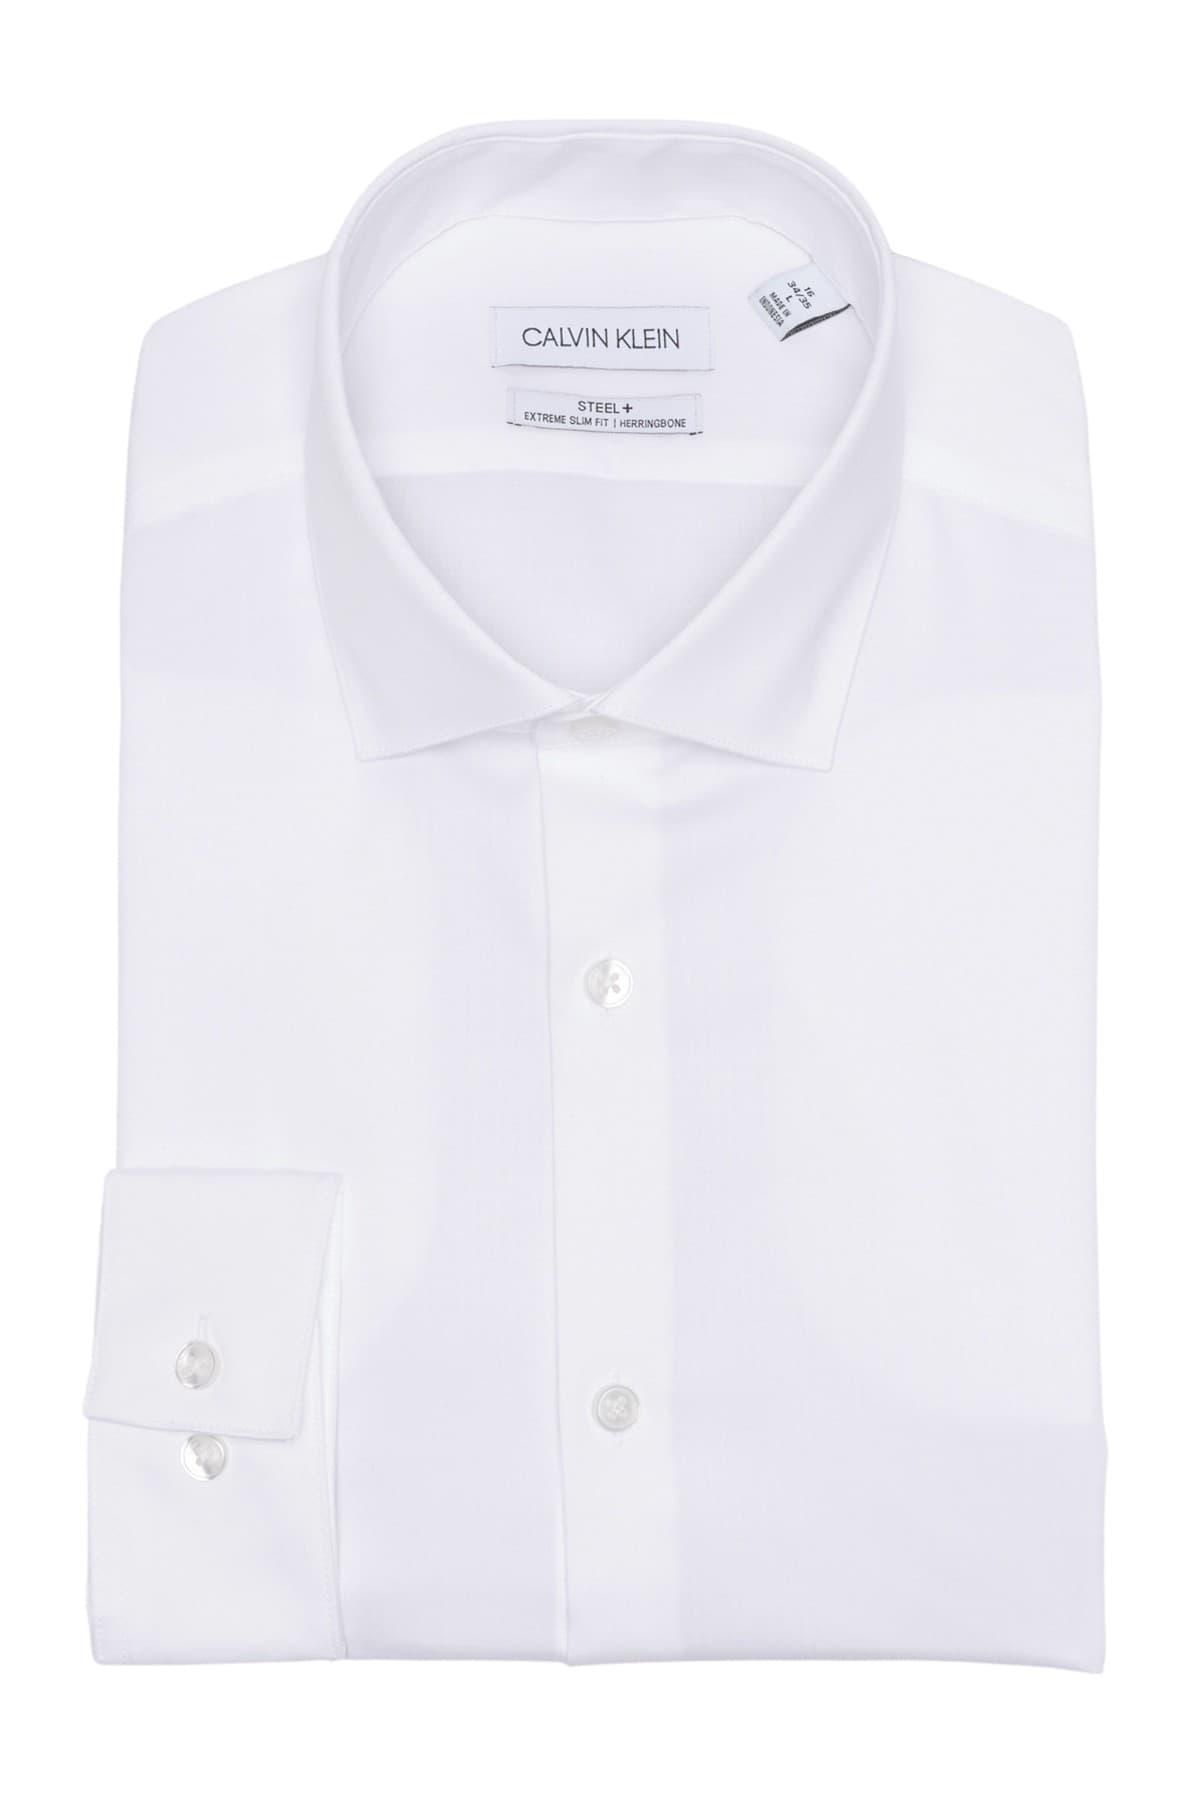 Calvin Klein Mens Dress Shirt Slim Fit Non Iron Solid Authenticity ...